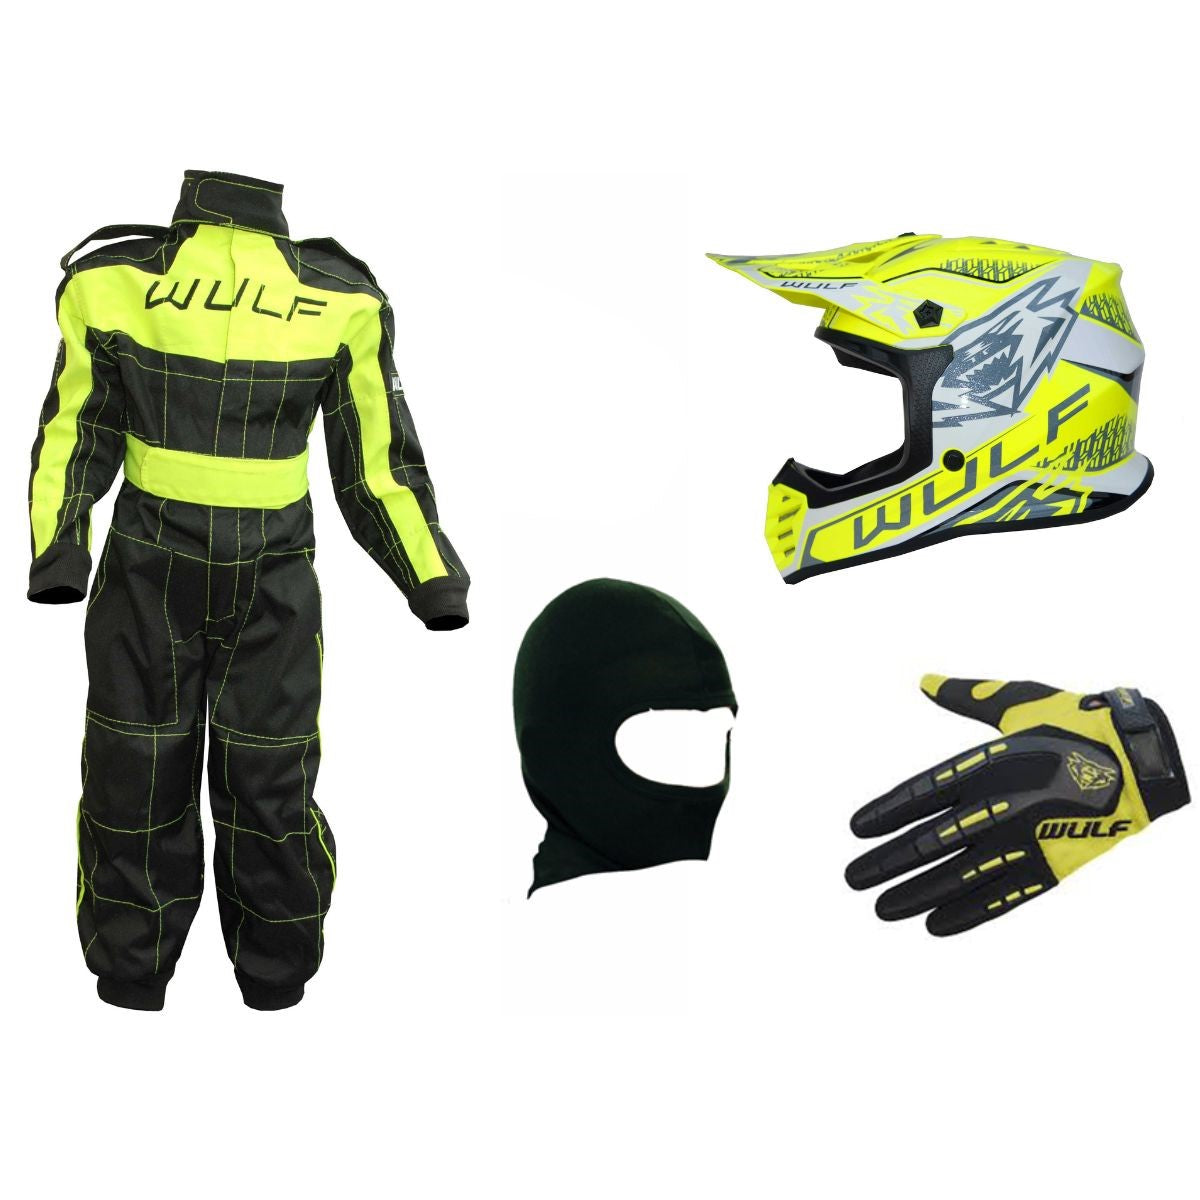 Kids Wulfsport Clothing & Helmet Bundle Deal - Yellow